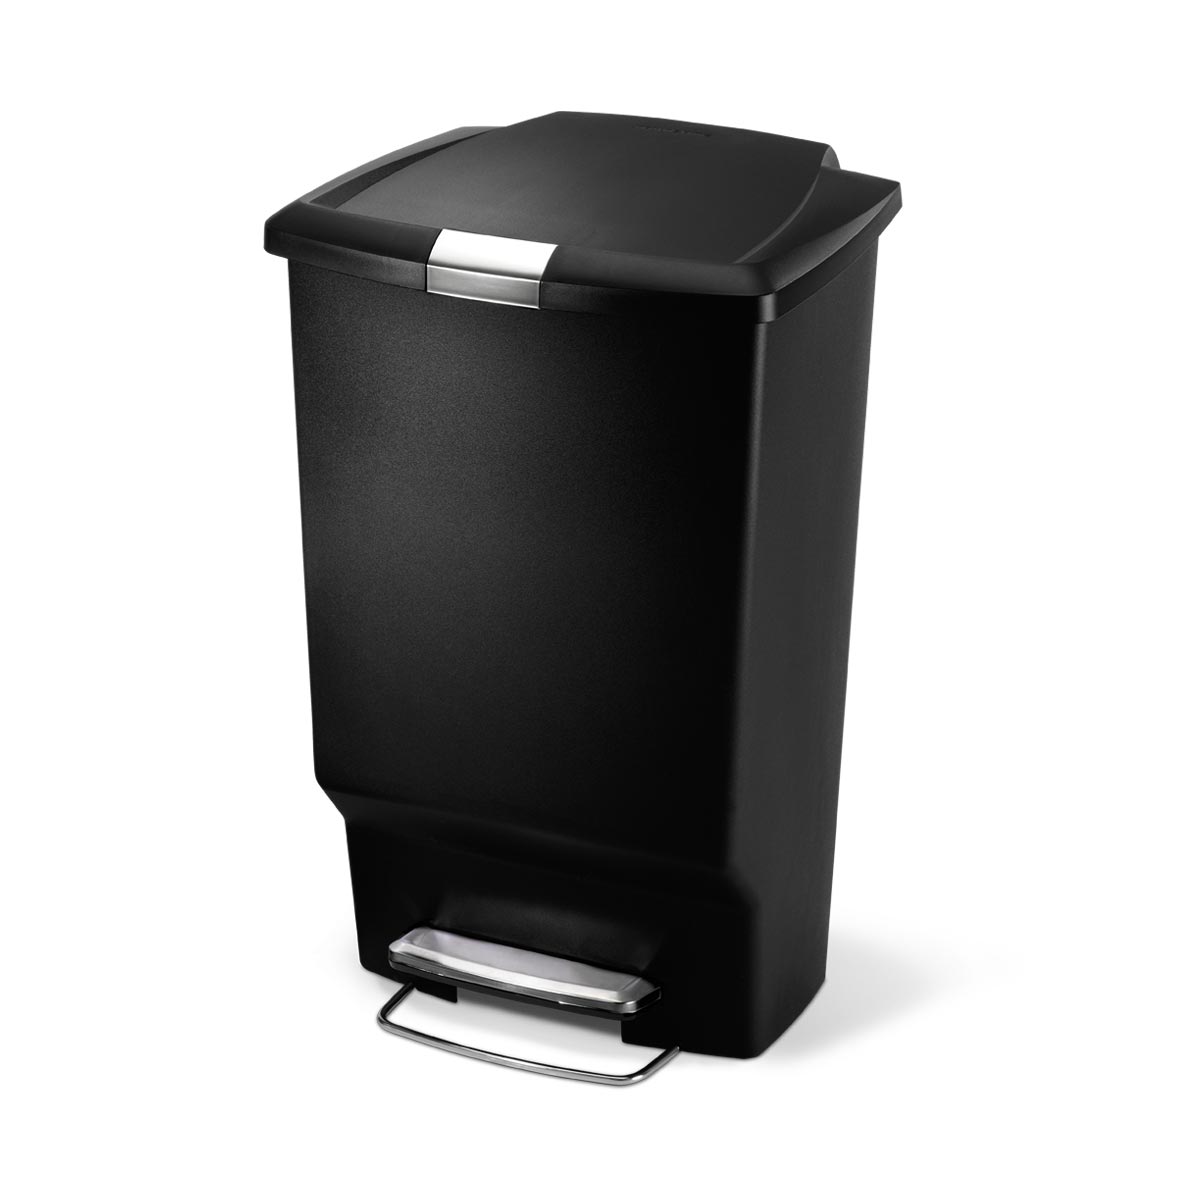 simplehuman 45 litre rectangular pedal bin, black plastic